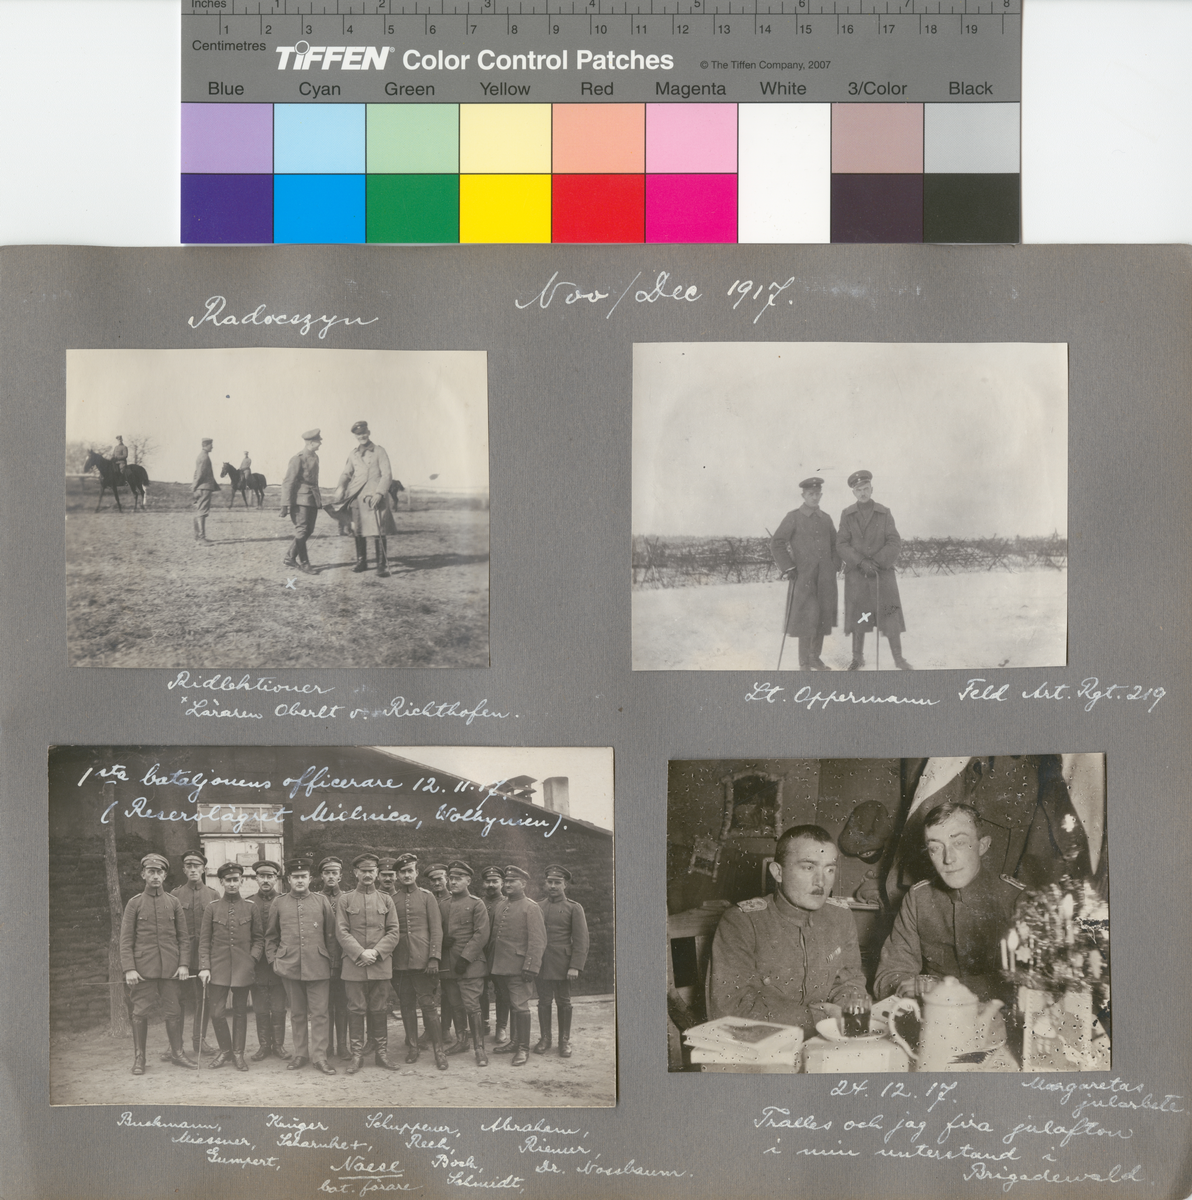 Text i fotoalbum: "Radoszyn Nov/Dec 1917. Ridlektioner. Läraren Oberlt v. Richthofen."